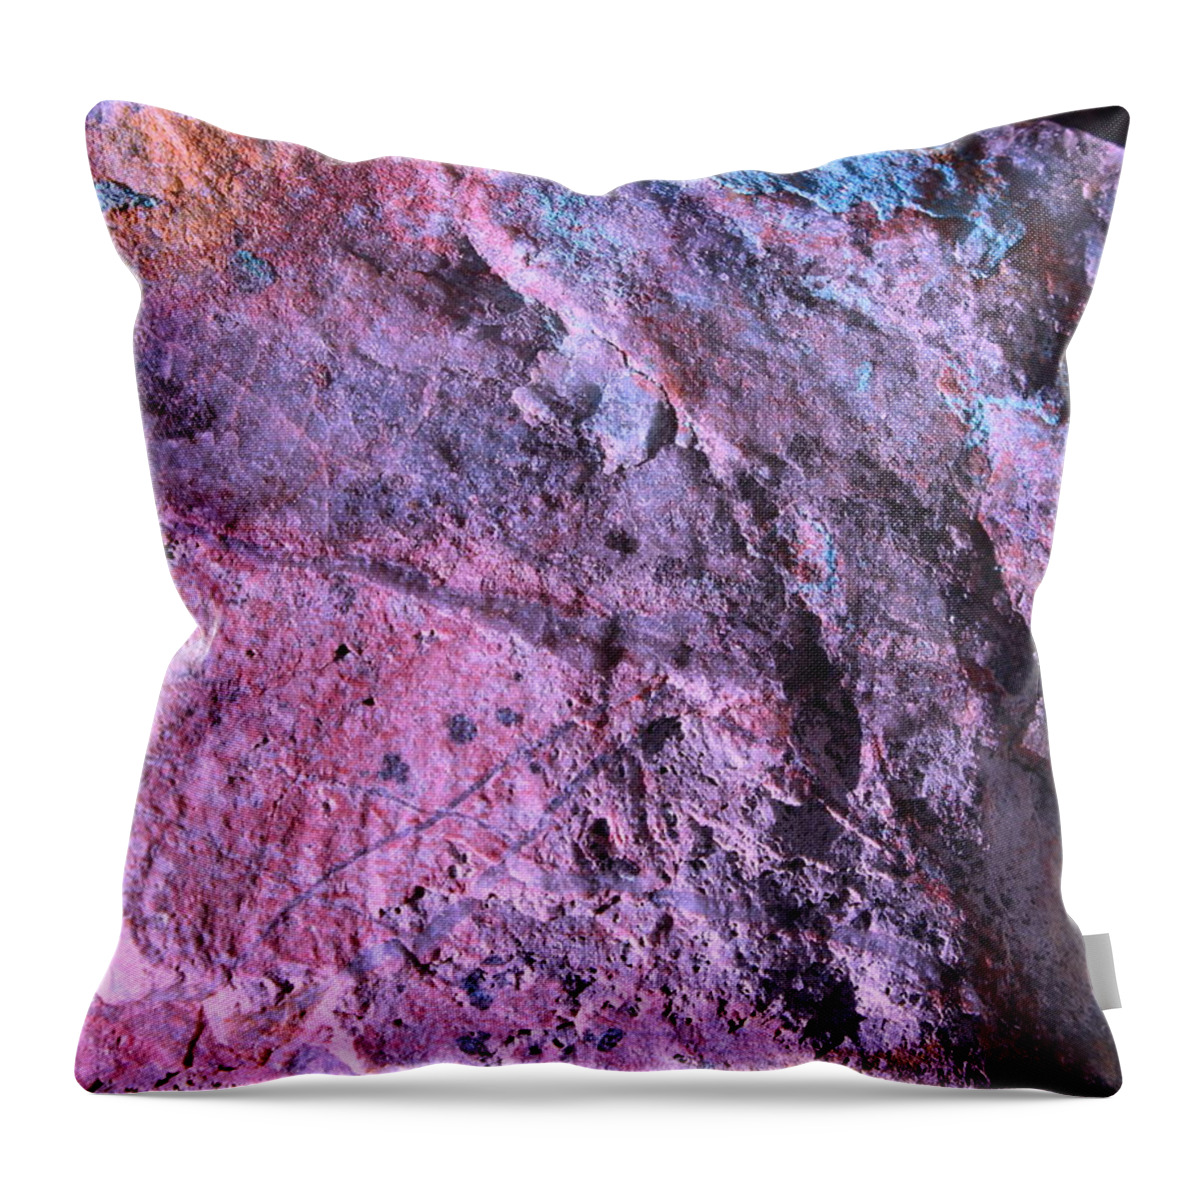 Rocks Throw Pillow featuring the photograph Rock Art 8 by M Diane Bonaparte